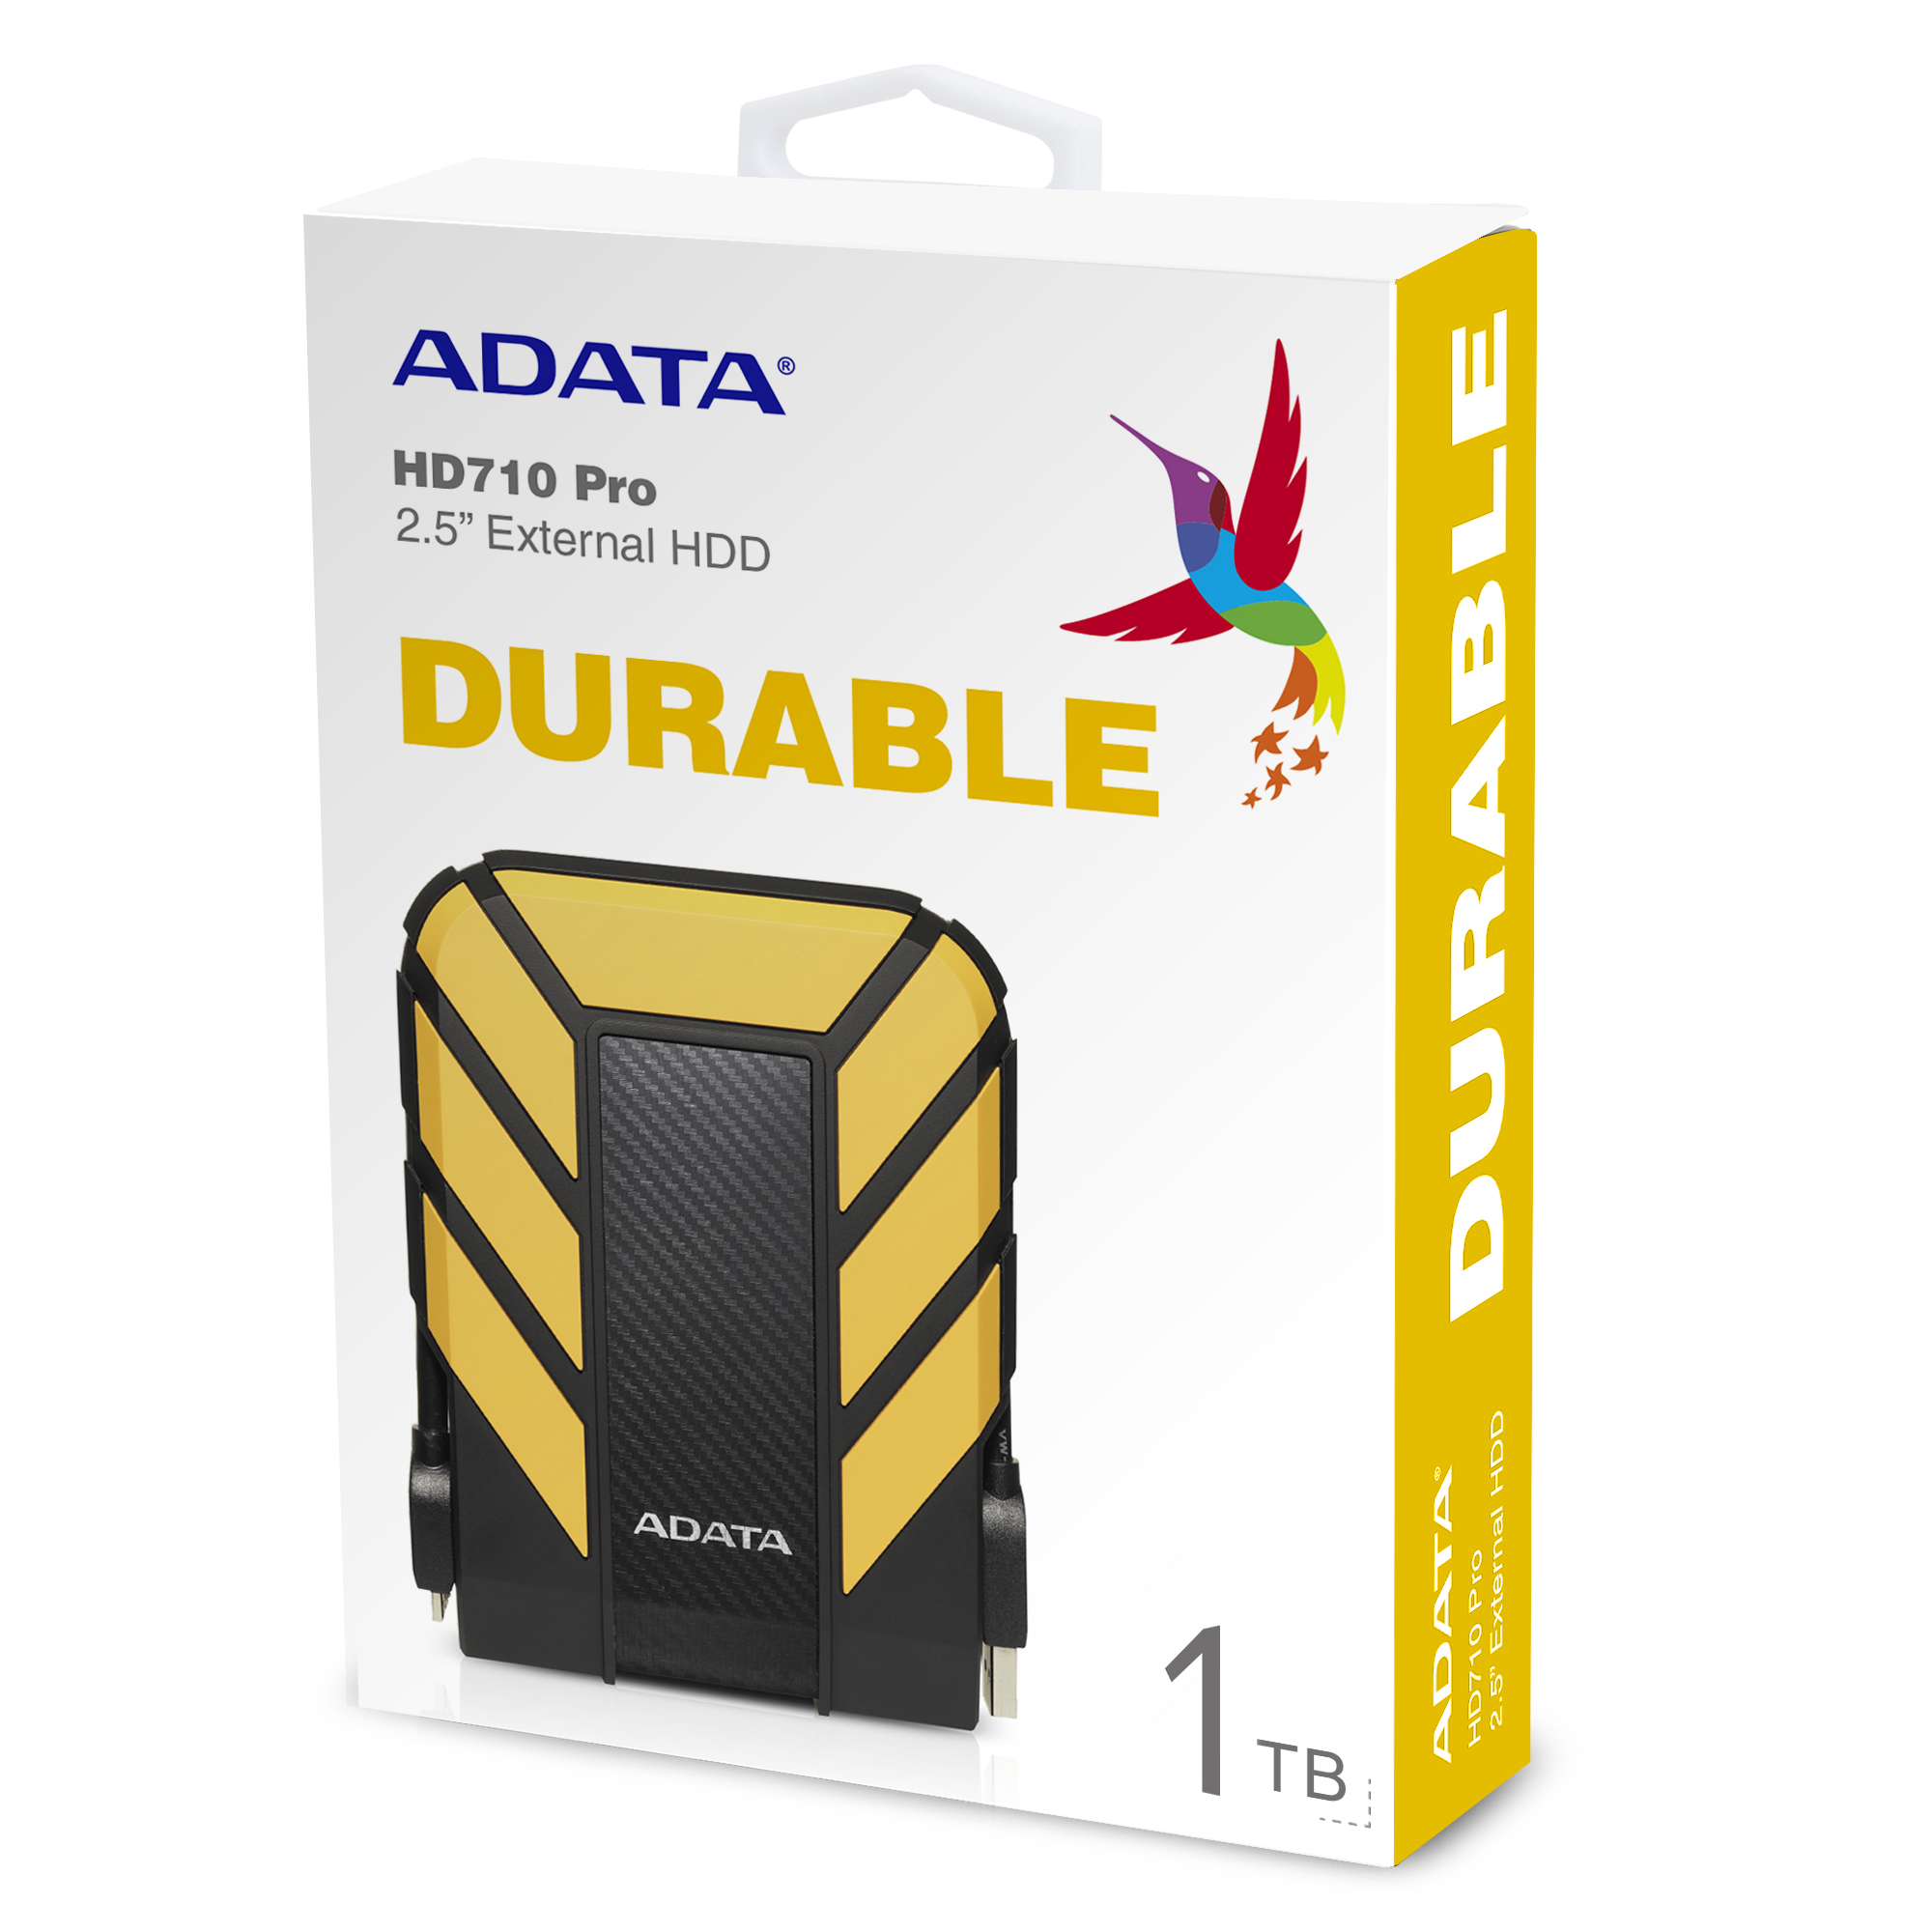 پاوربانک HD710 Pro ایدیتا 1 ترابایت مدل Adata HD710 Pro Durable